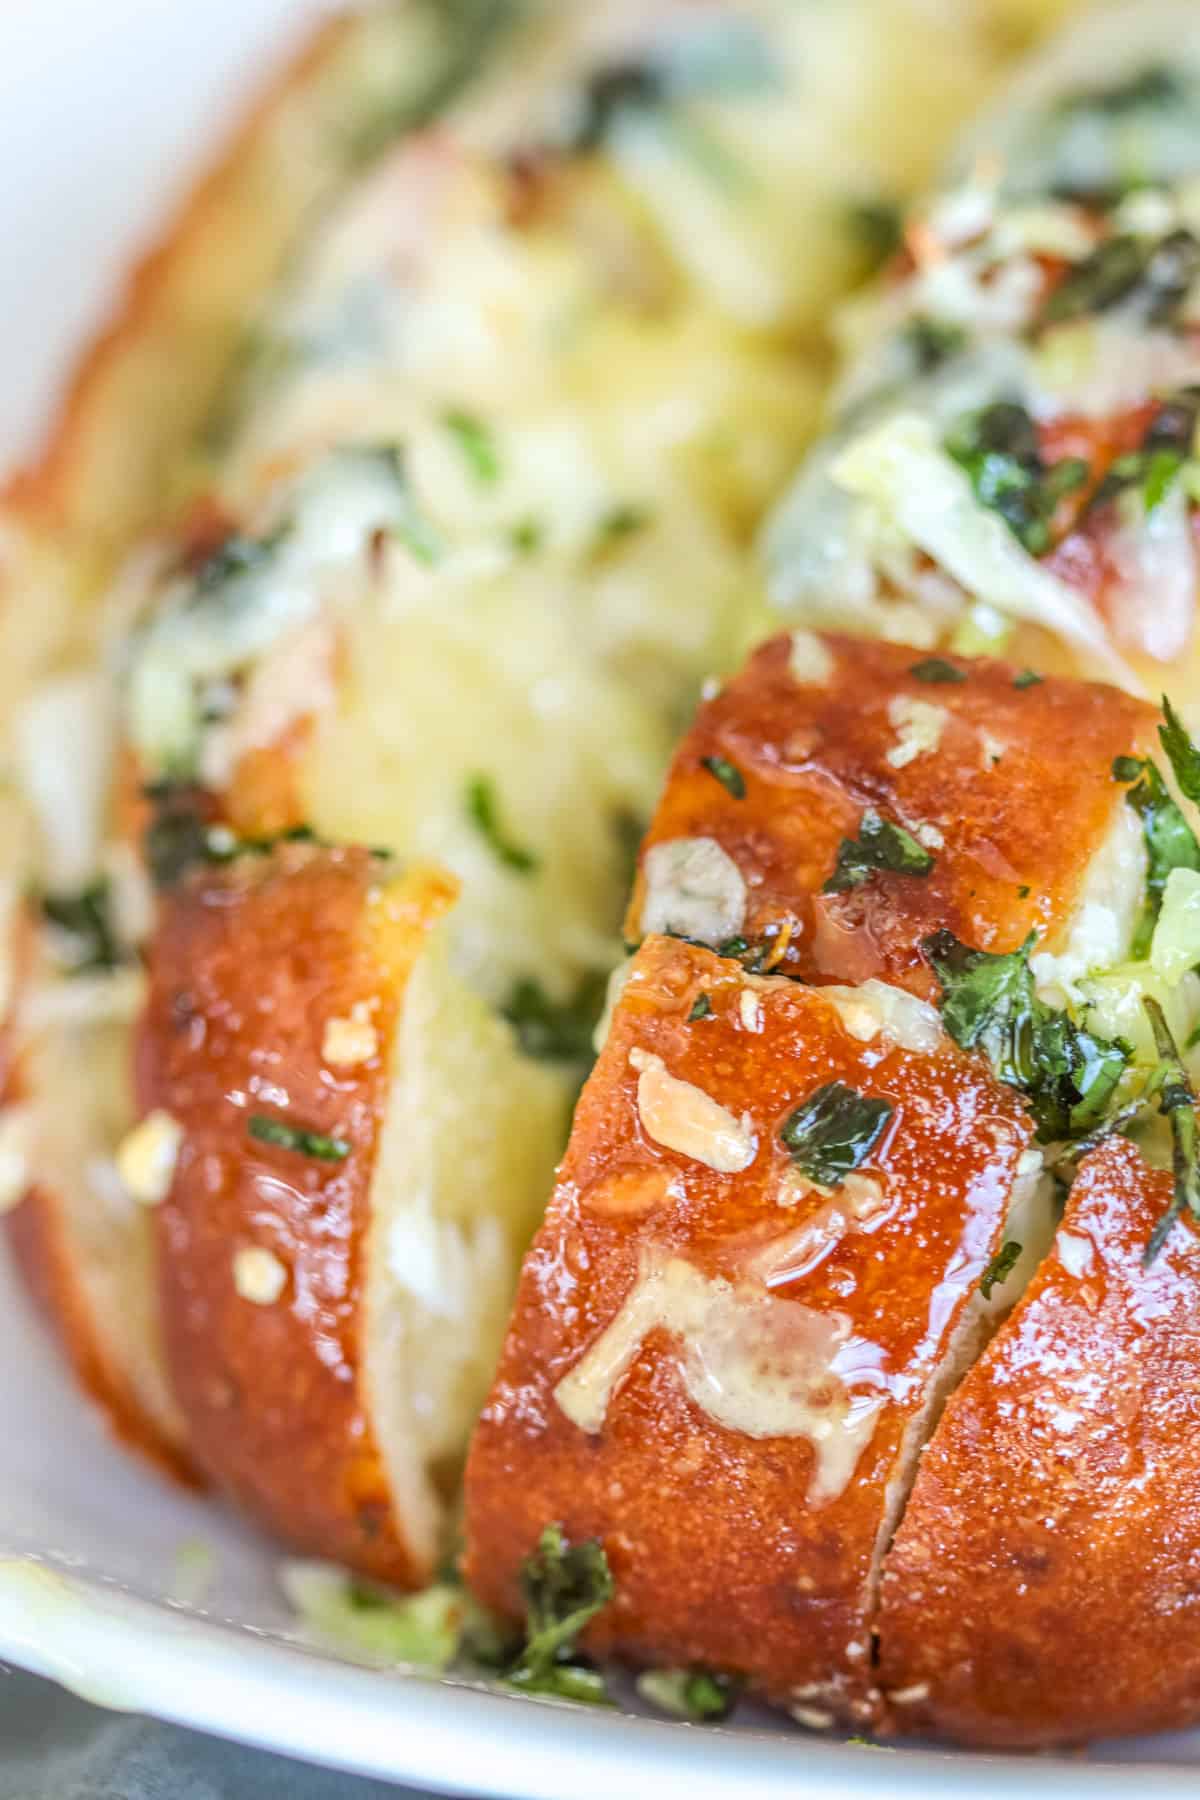 Cheesy garlic pull apart bread close up.